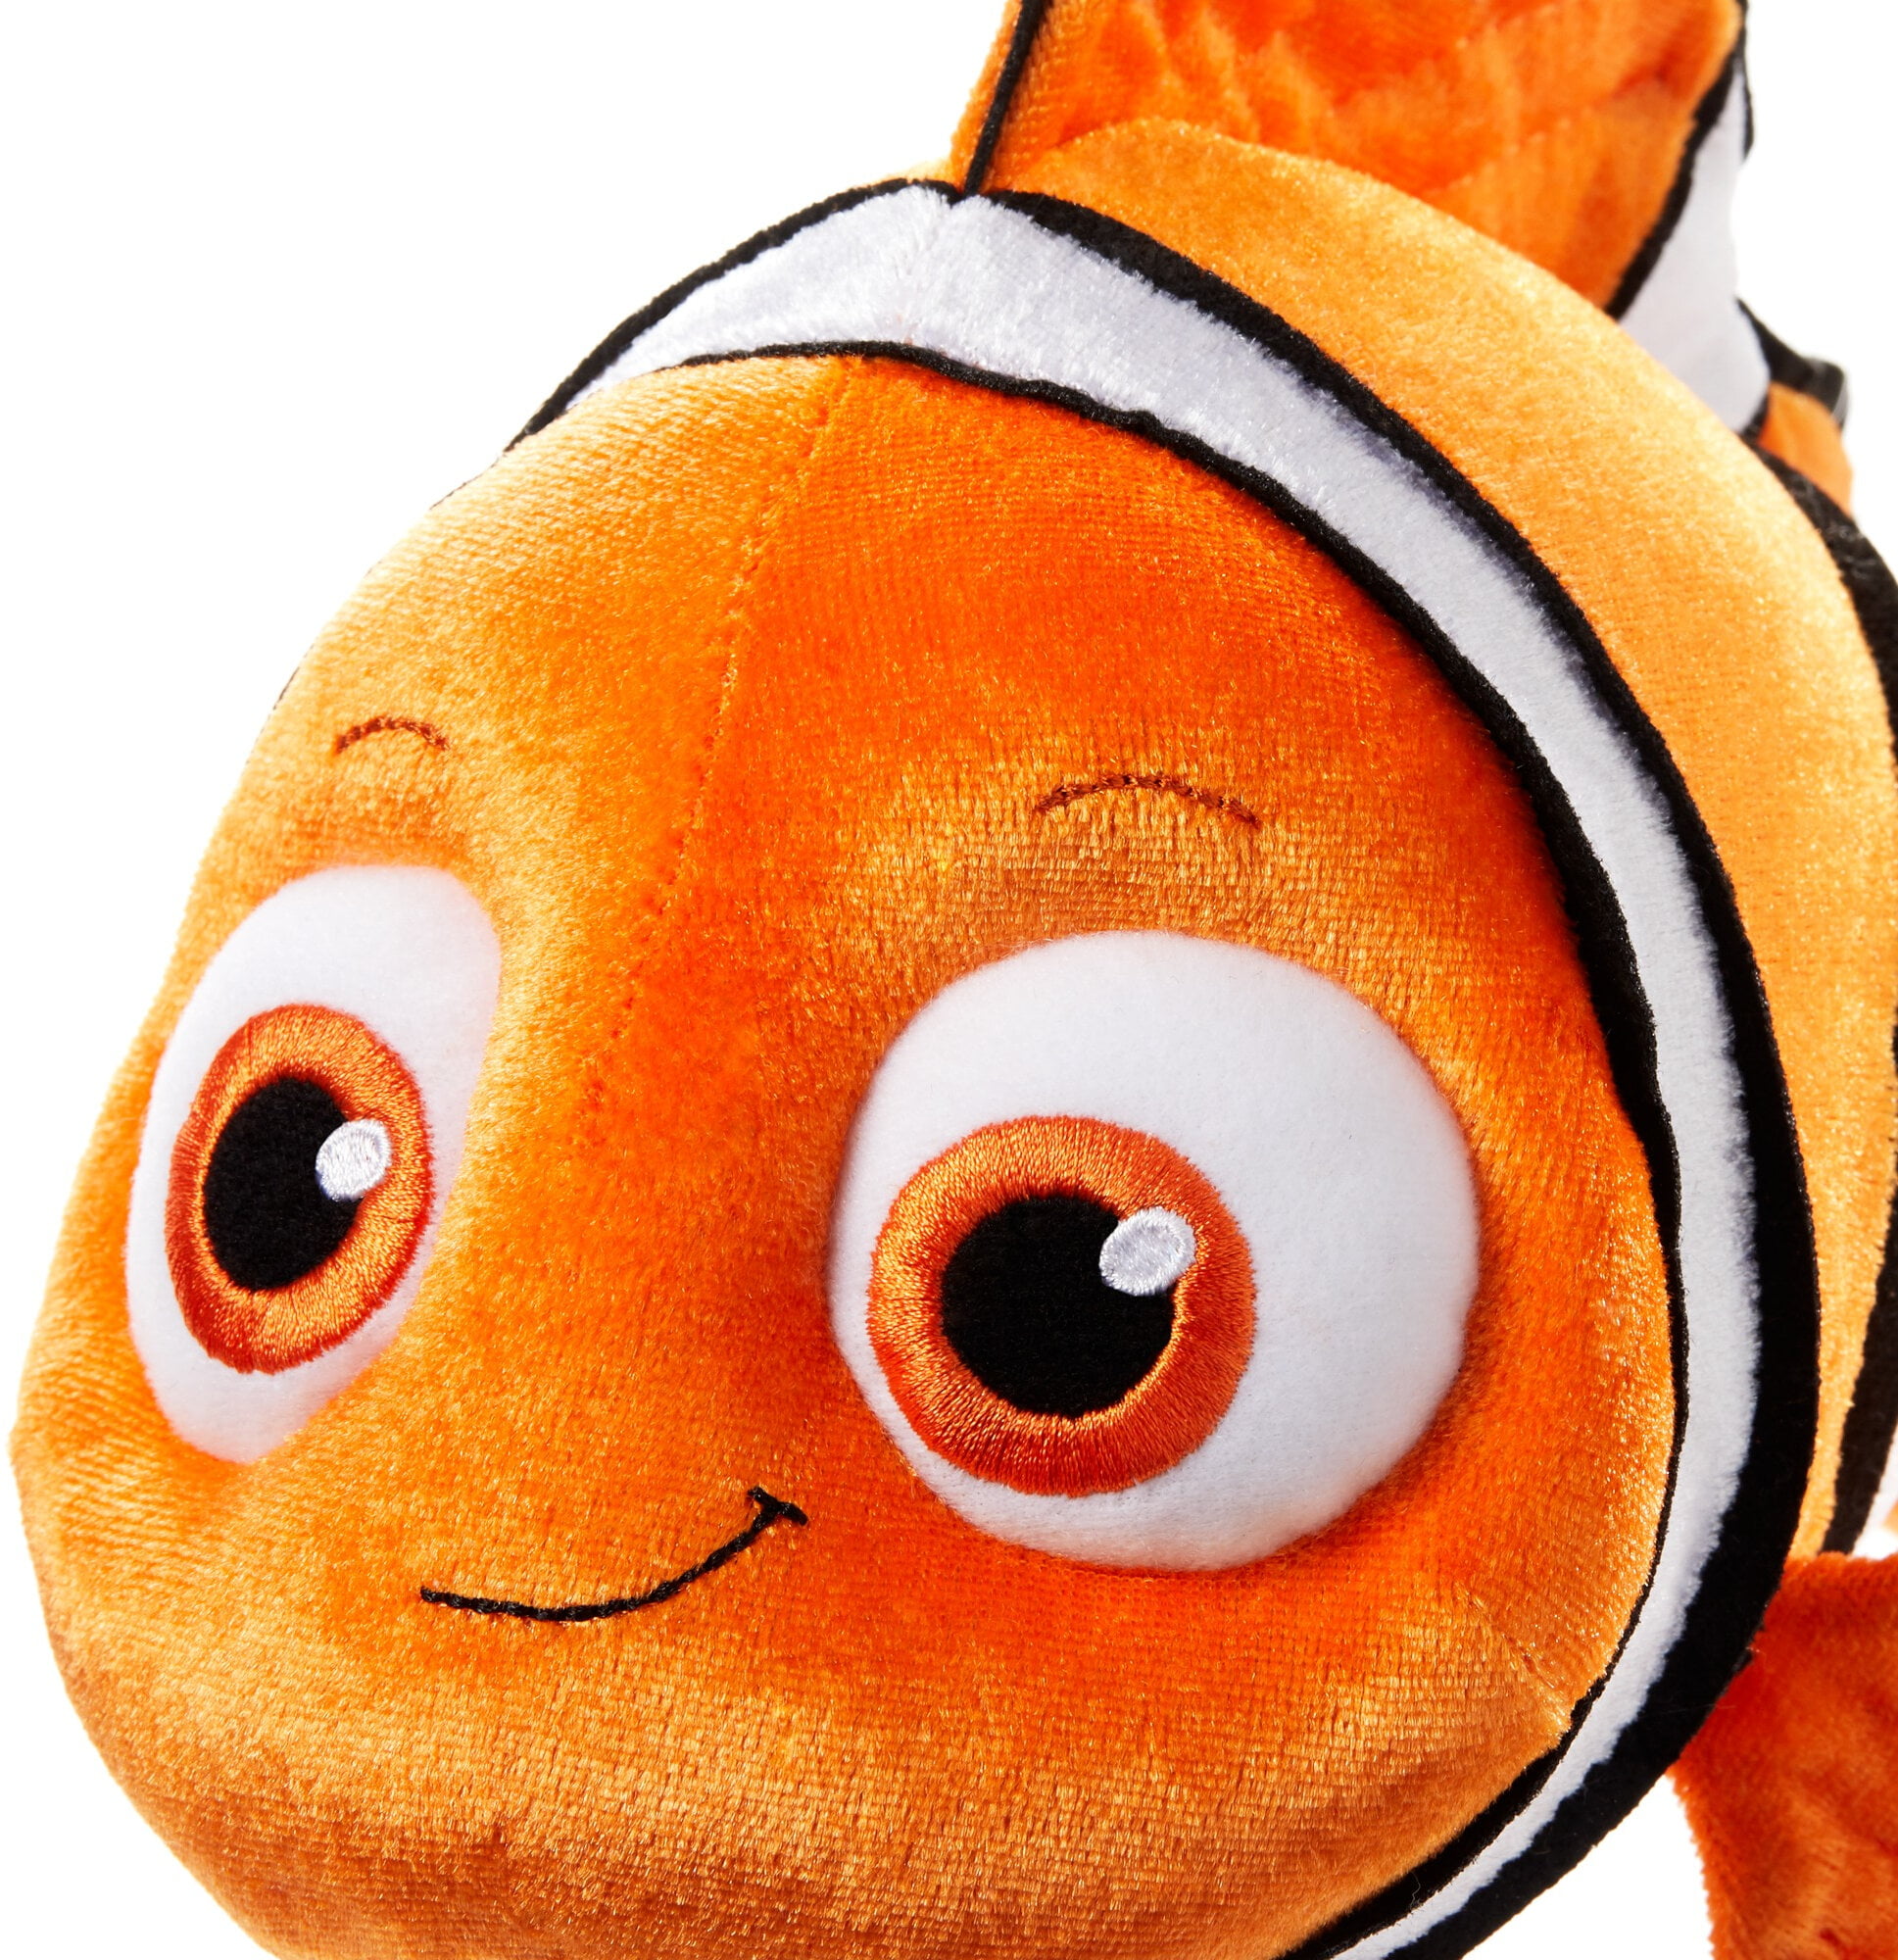 Le monde de Nemo 12 Plush Nemo Peluche